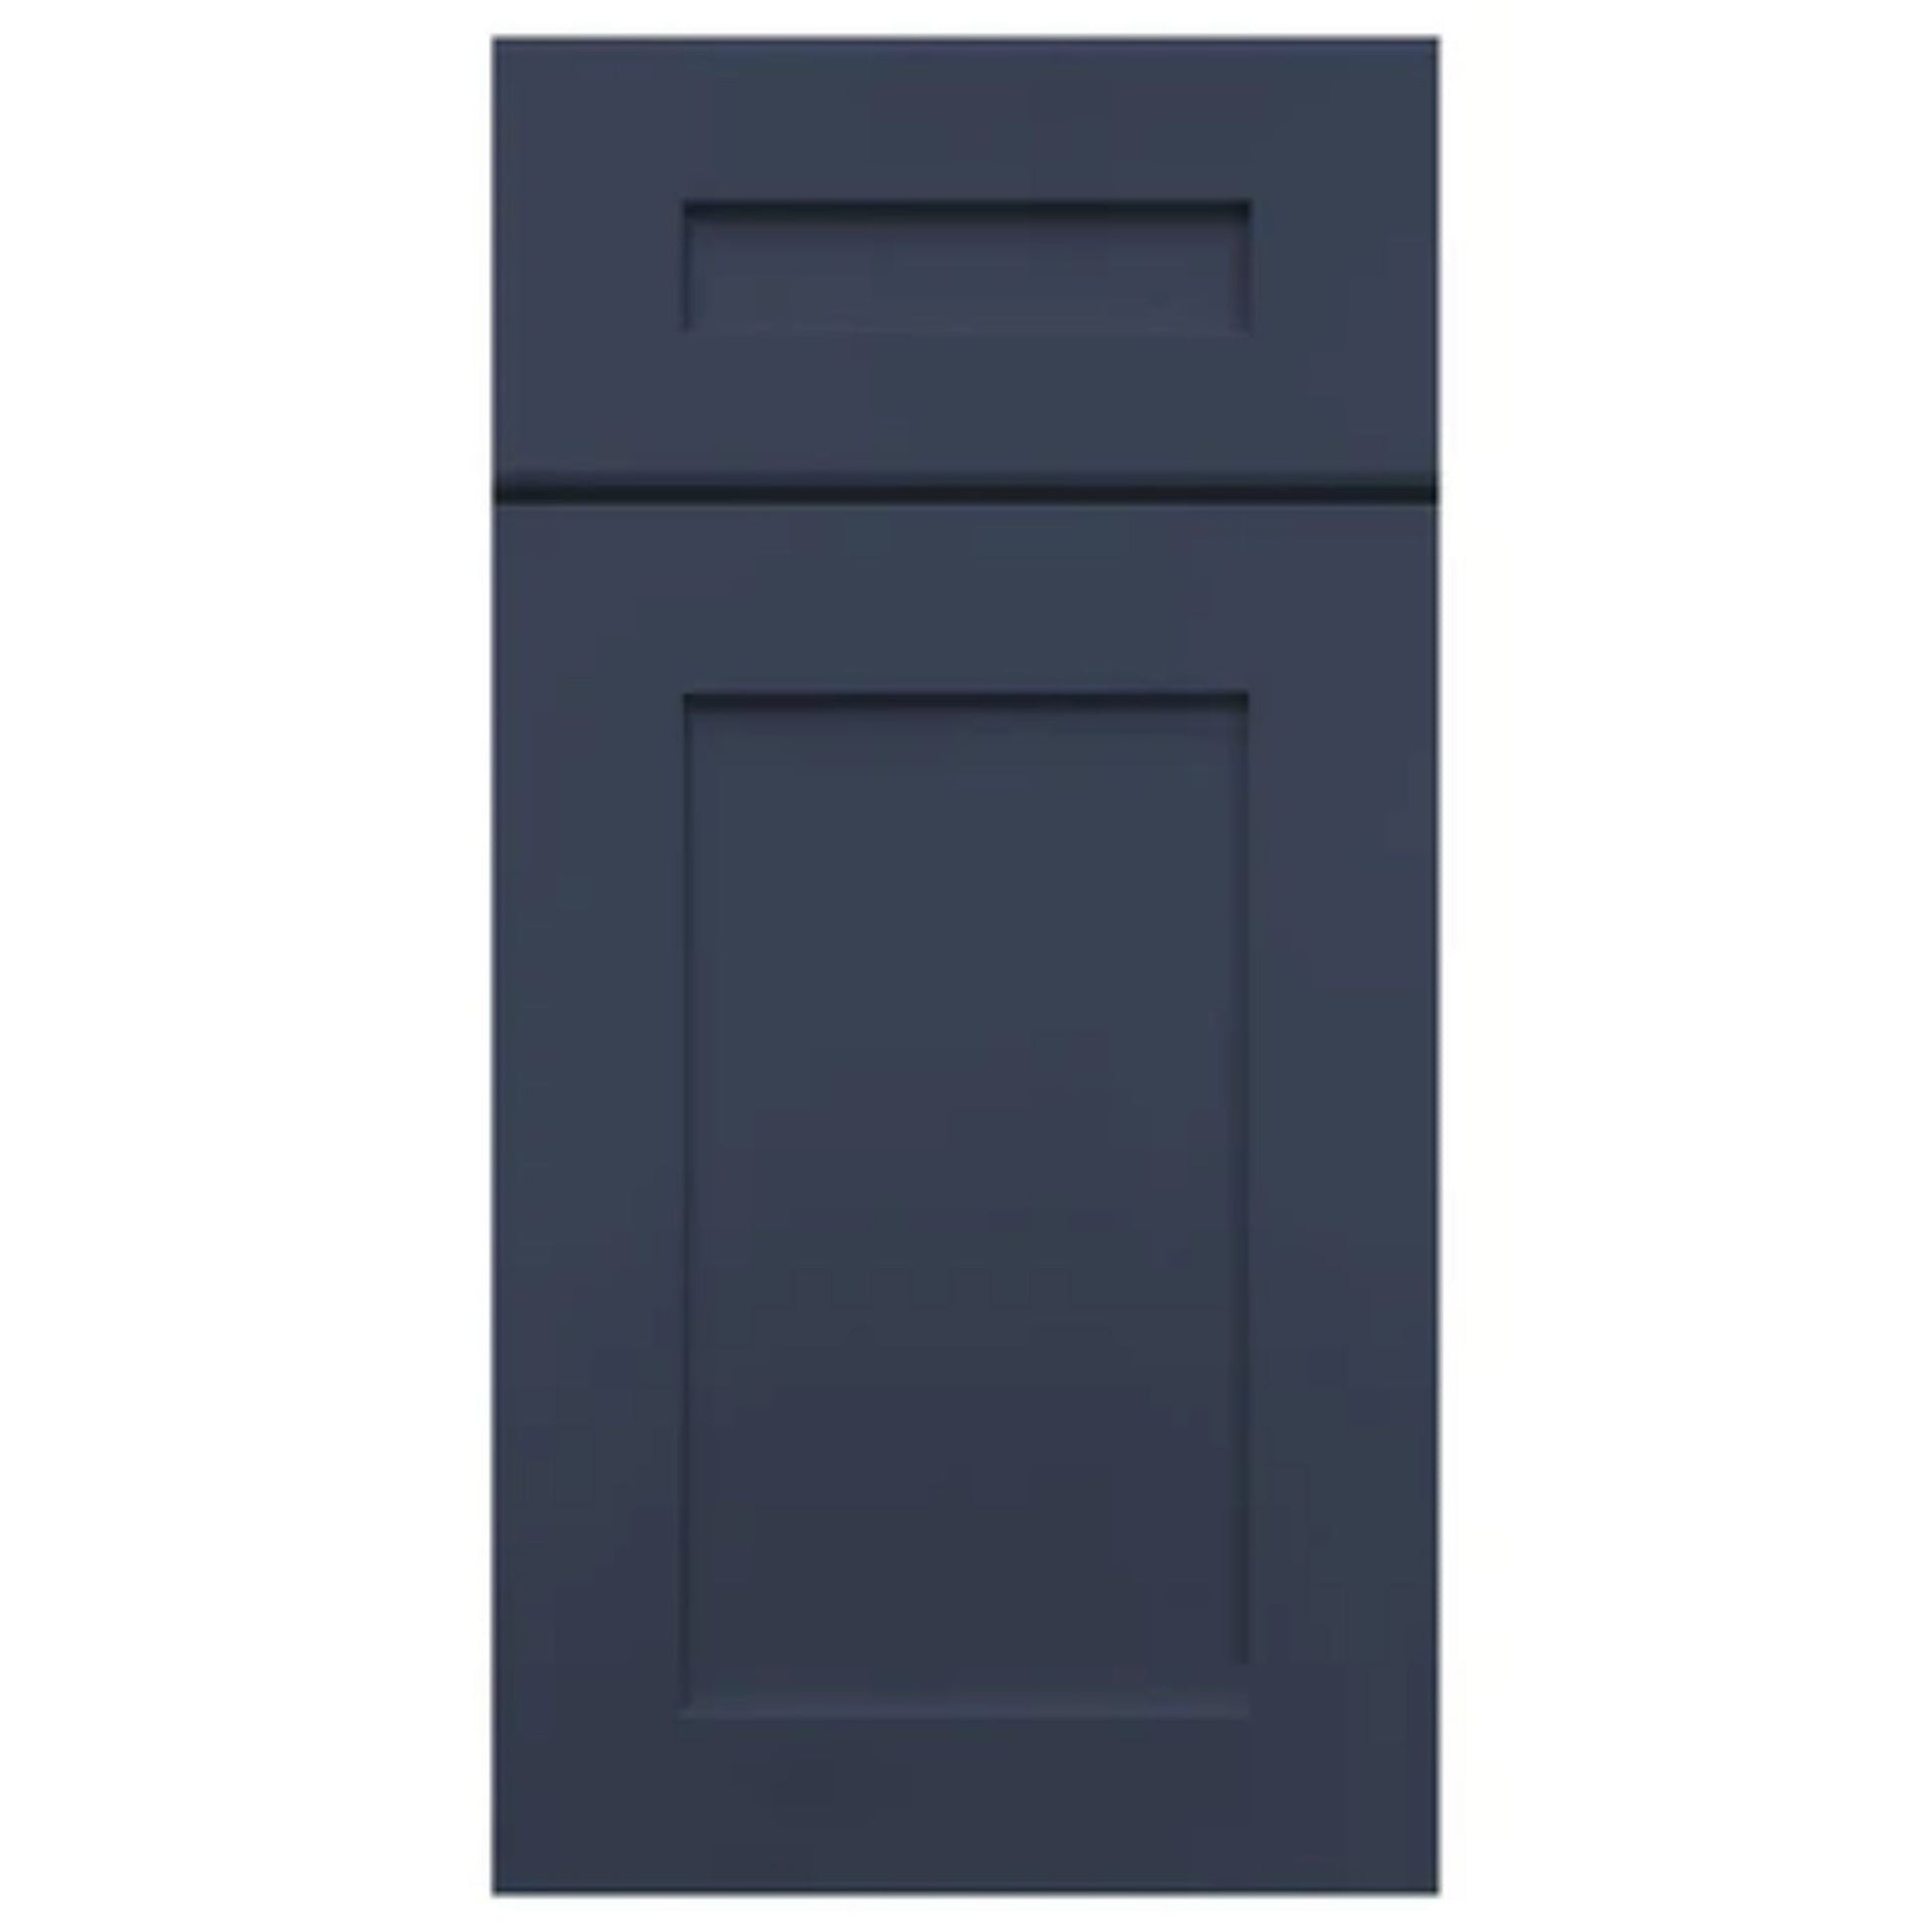 LessCare 27" x 42" x 12" Danbury Blue Wall Kitchen Cabinet - W2742